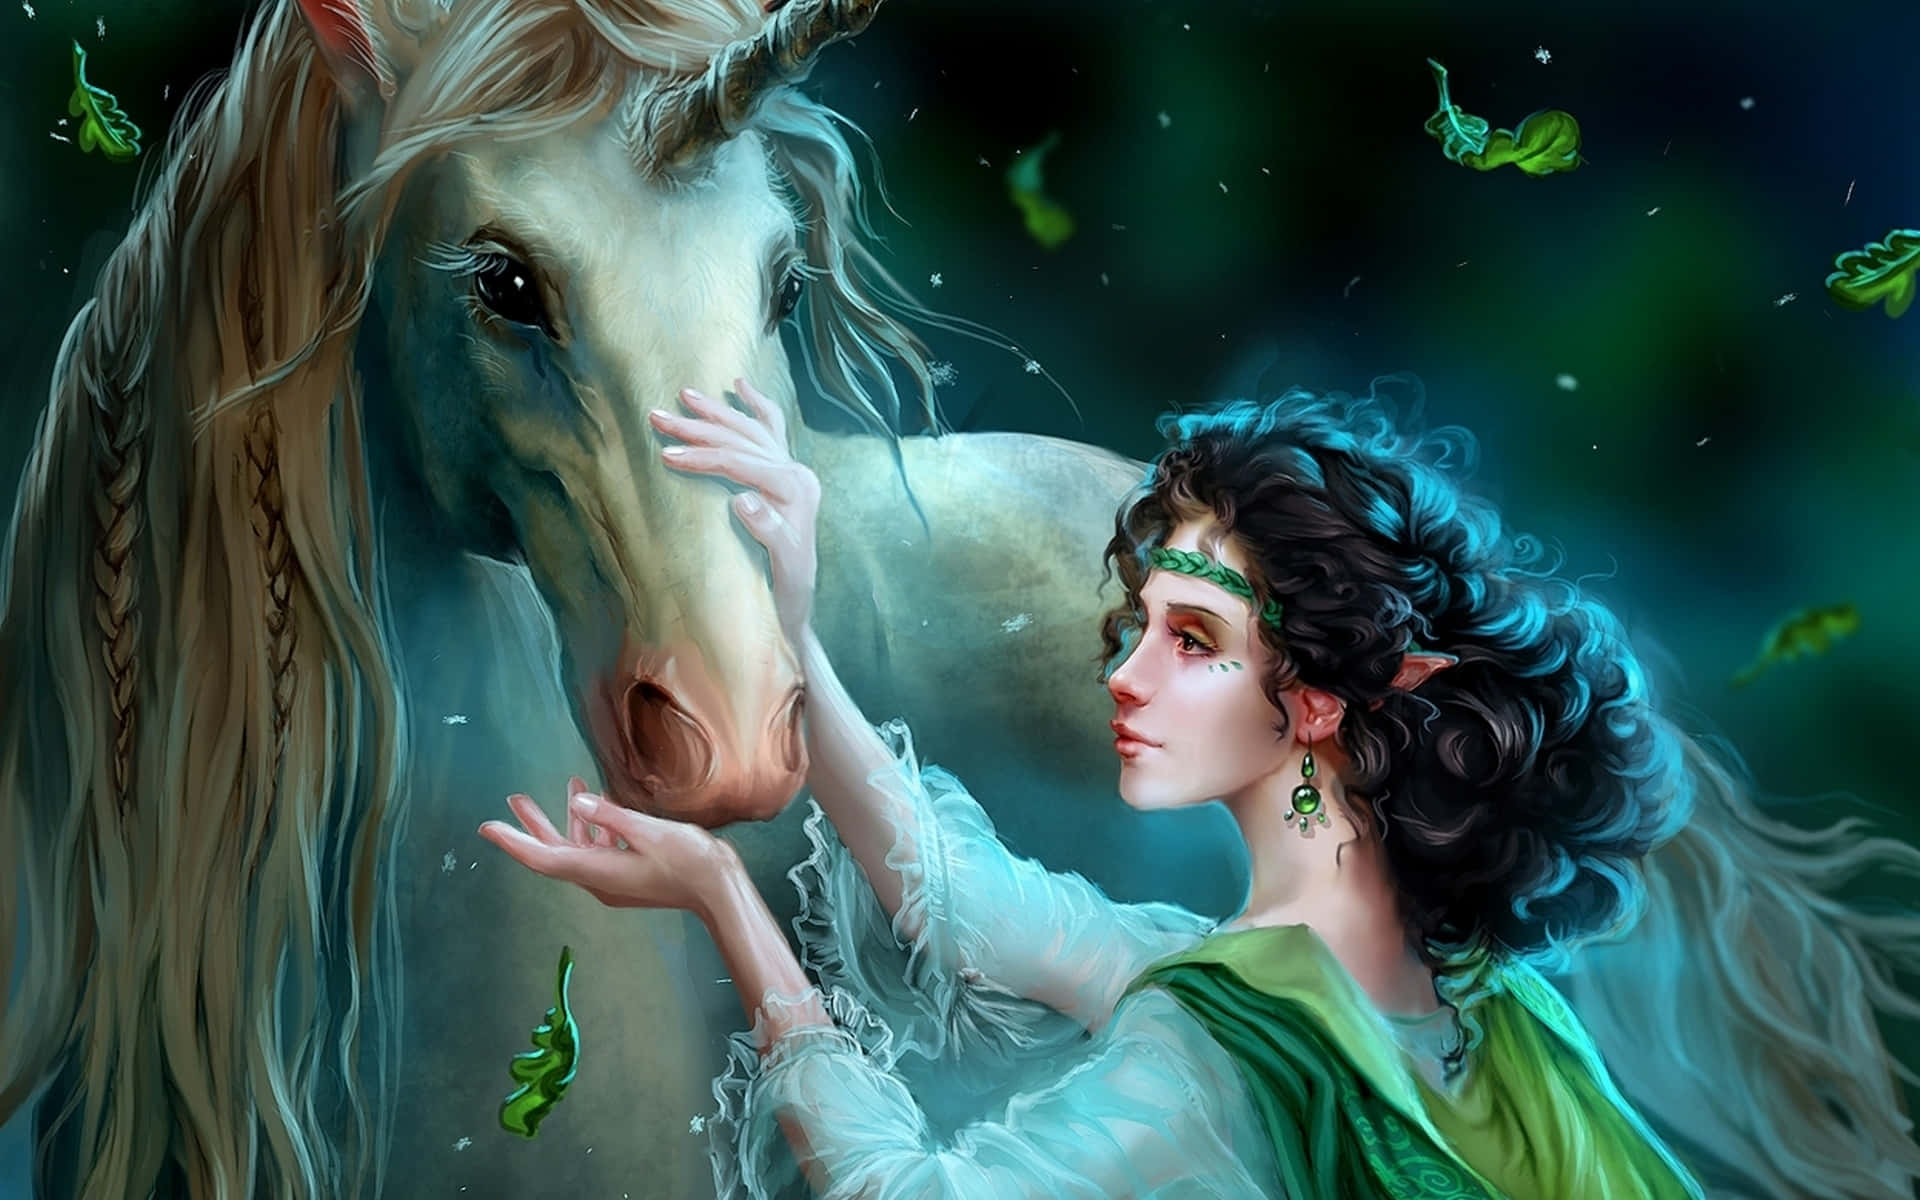 Fantasy Come True - A Magical Unicorn on Your Desktop Wallpaper